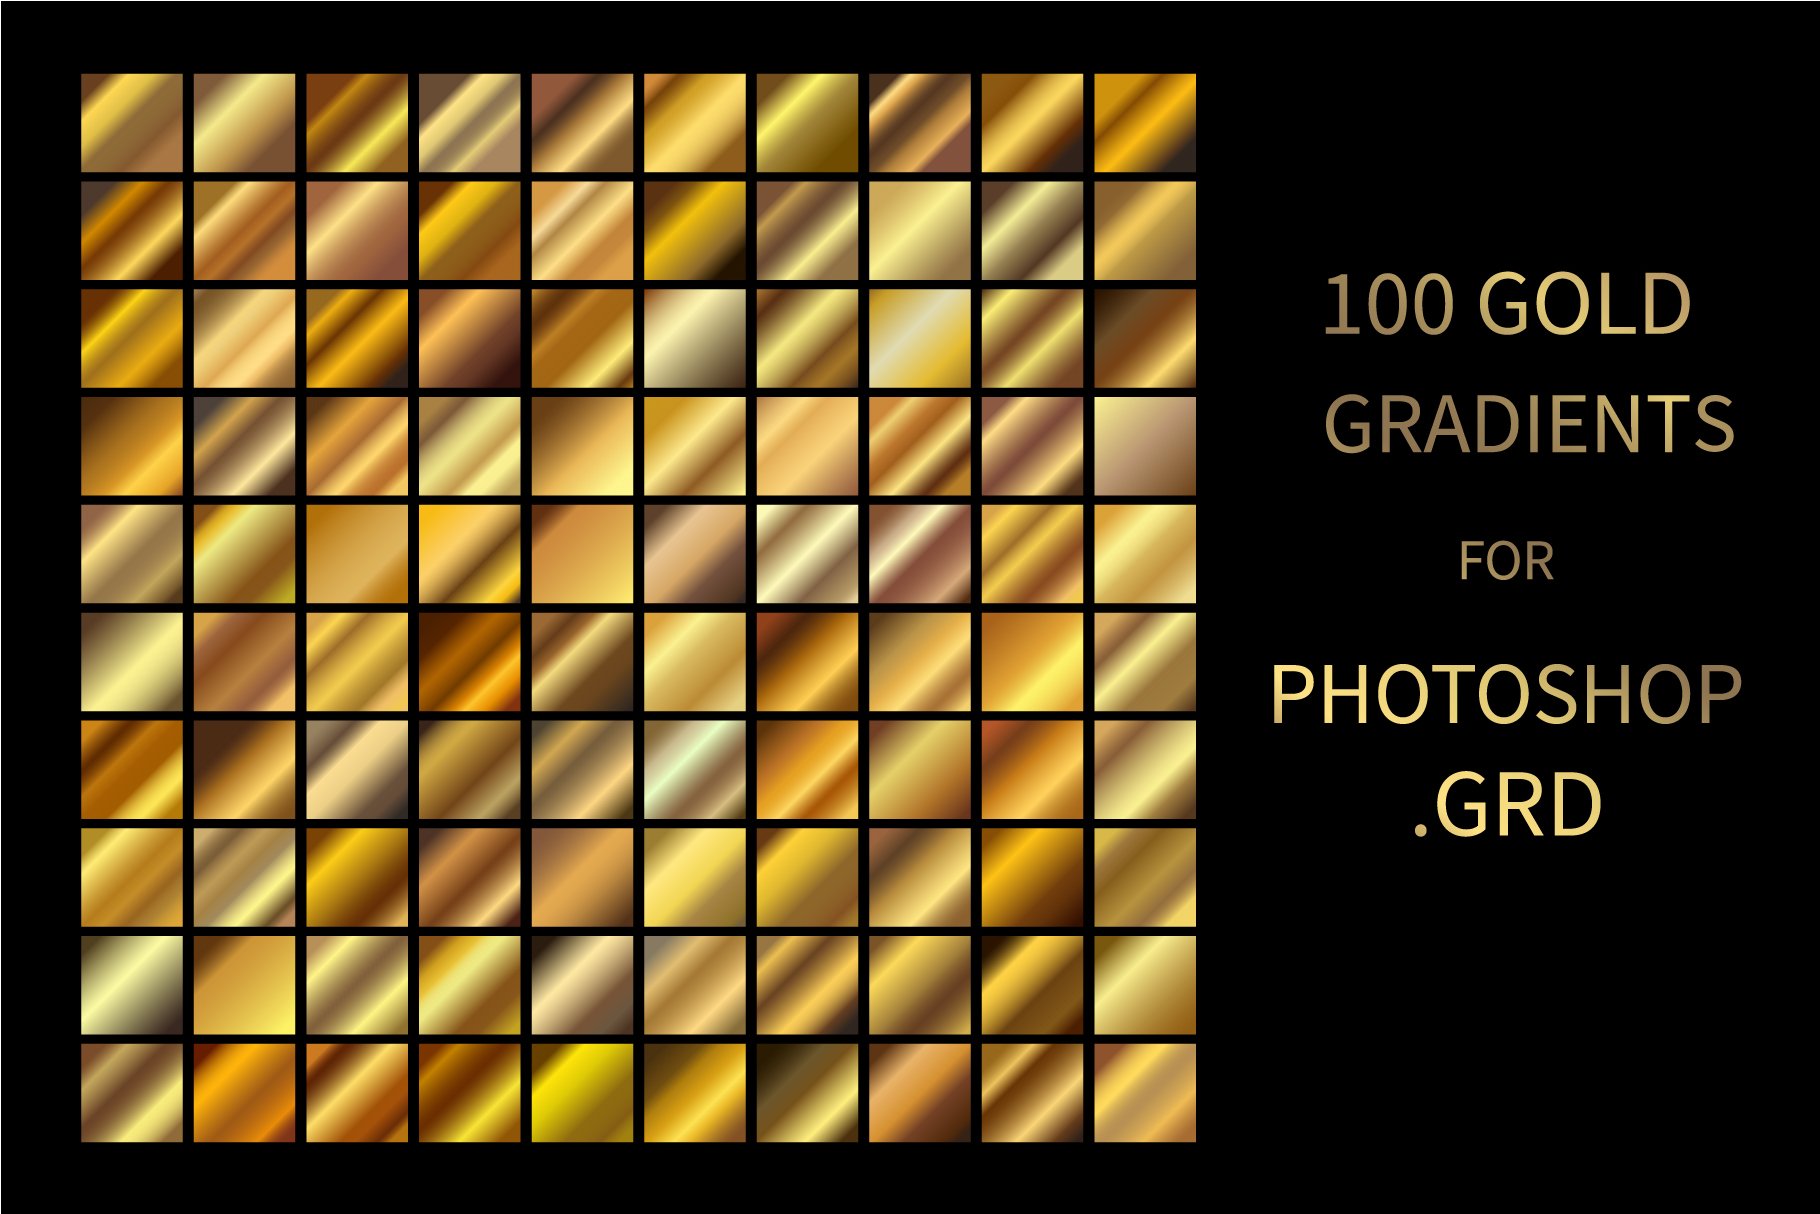 photoshop gold gradient download